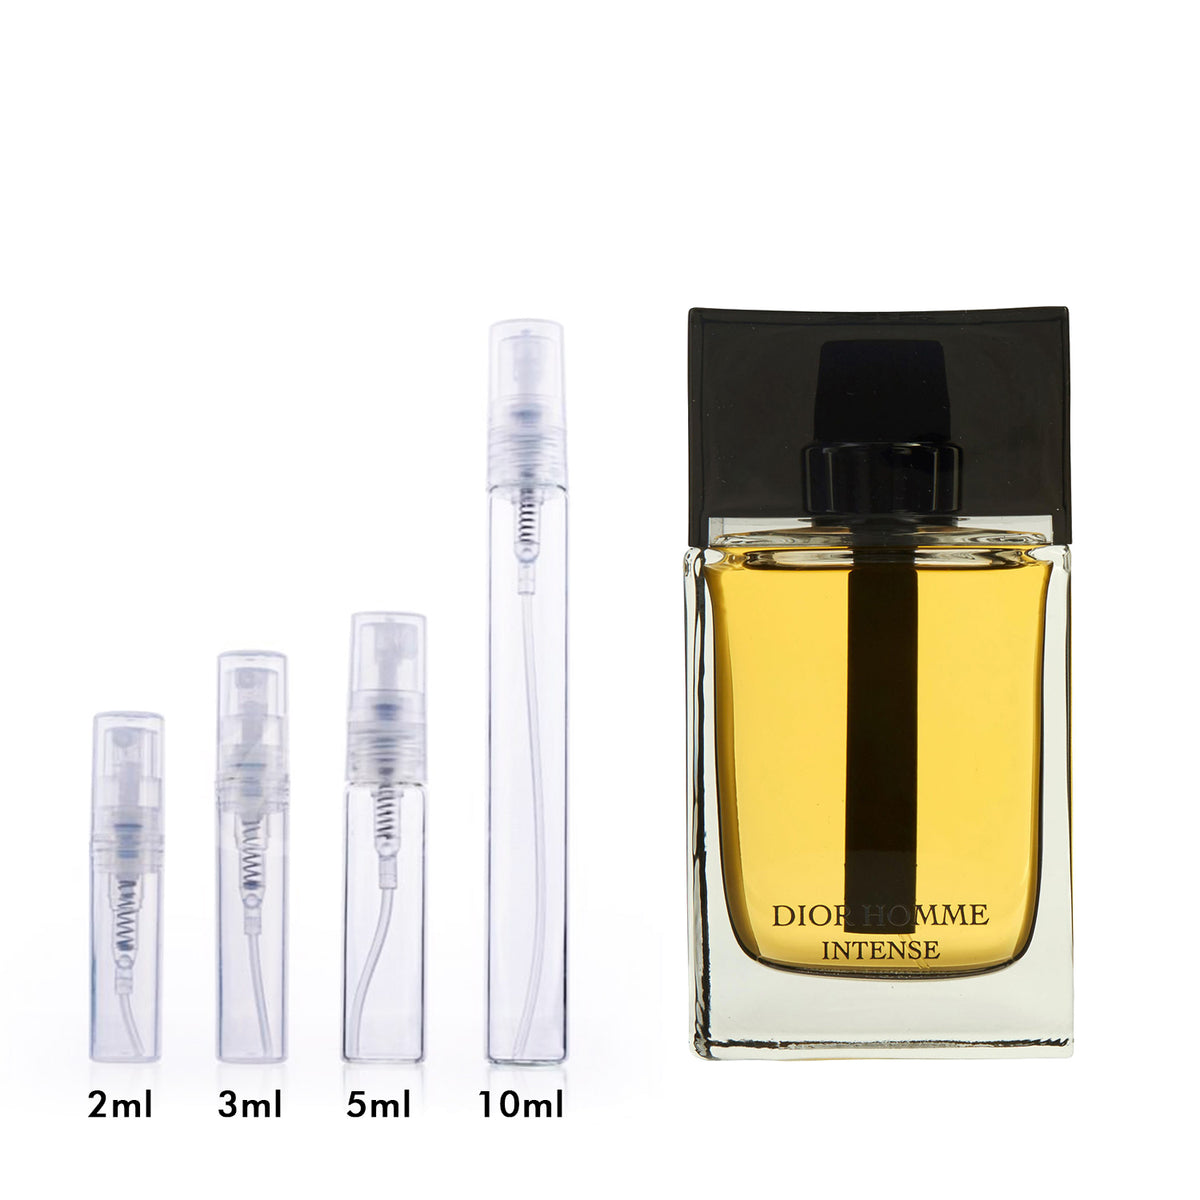 Vermaken Verslagen beton Dior Dior Homme Intense Eau de Parfum for Men – DecantX Perfume & Cologne  Decant Fragrance Samples